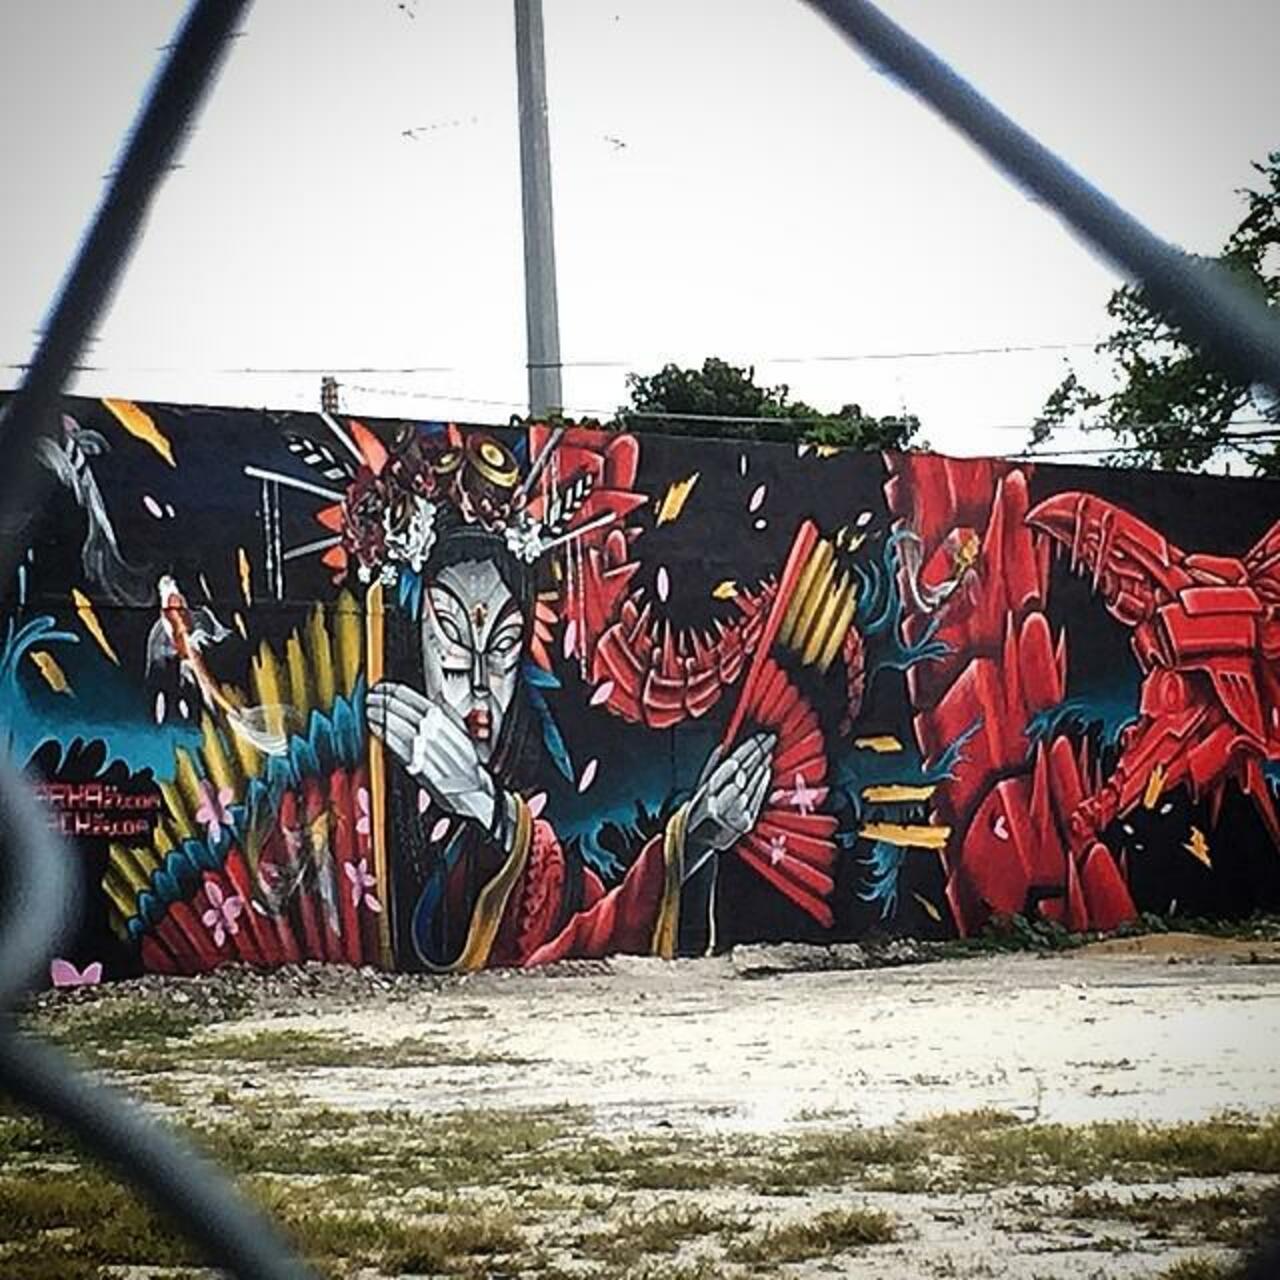 #streetart #wynwoodwall #streetartwynwood #mural #streetartmiami #graffiti #iphoneography #art by mariabongiovani http://t.co/KsDL8E9xcW